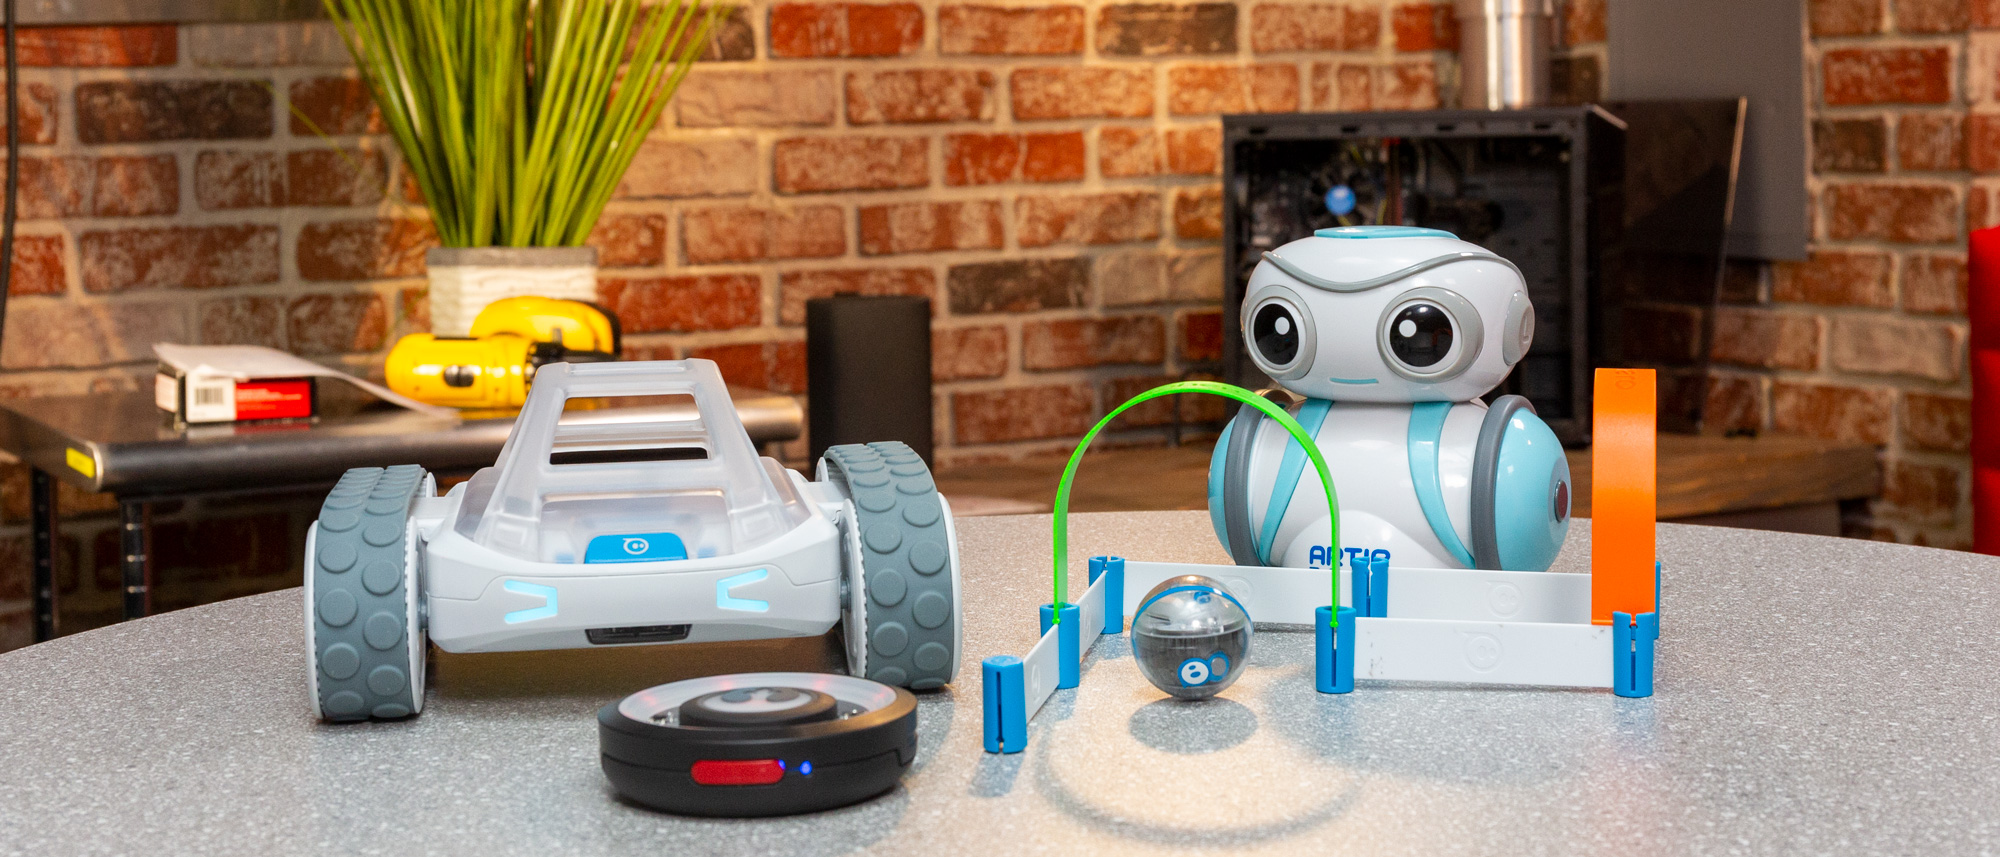 Best STEM Toys / Kids Robots 2019